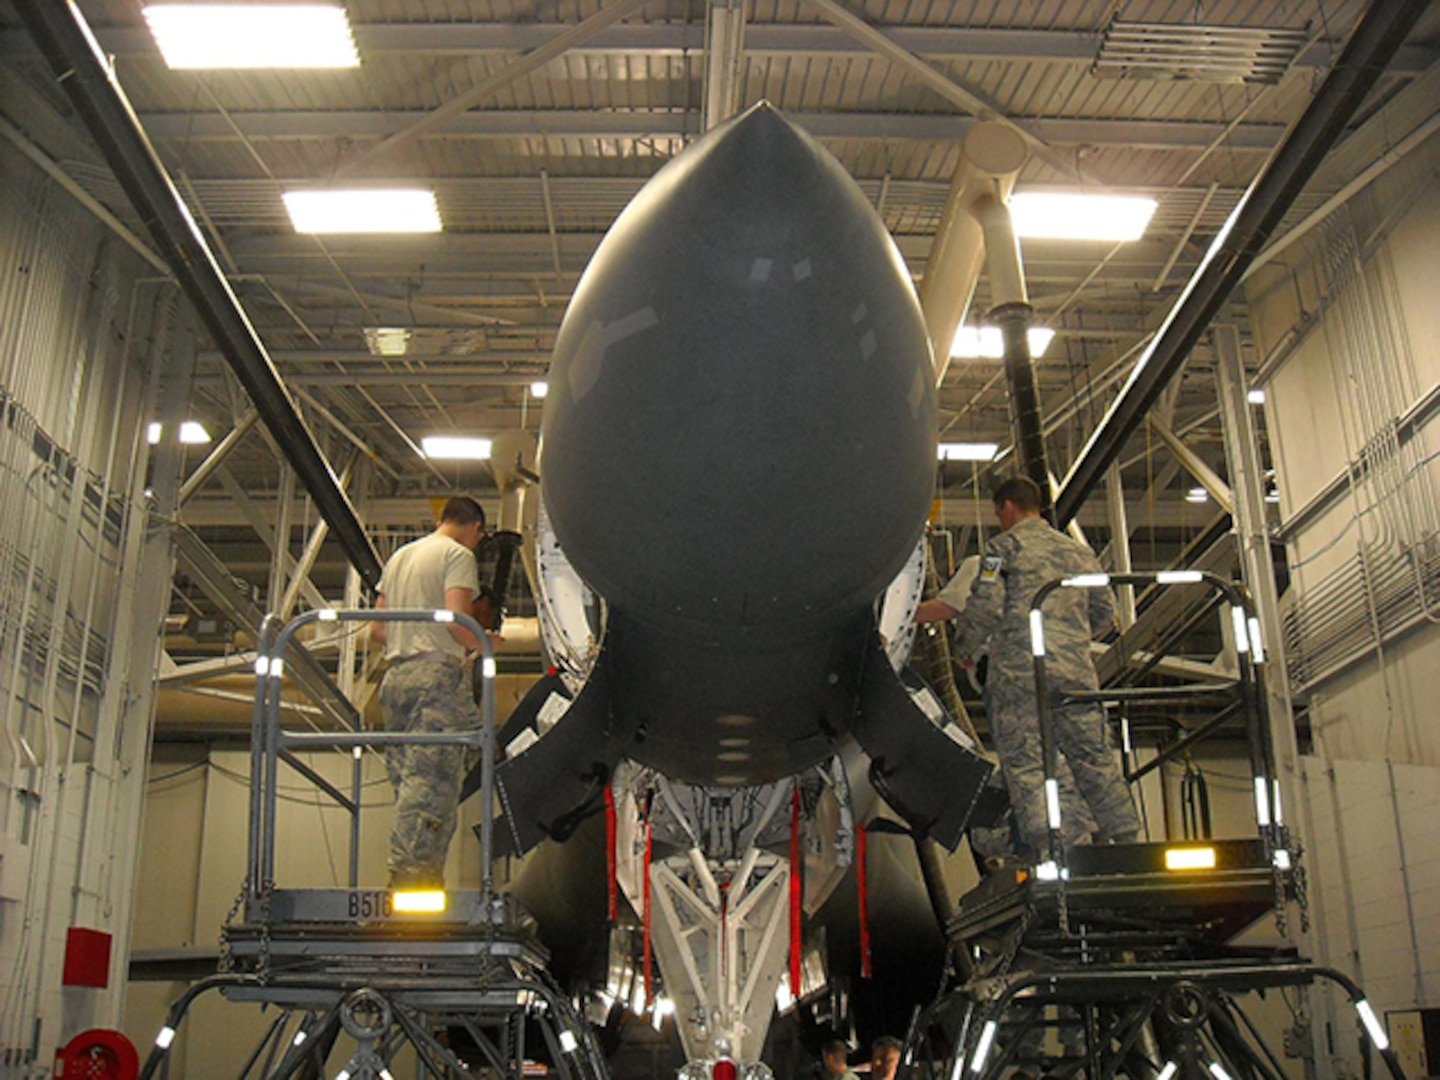 Airmen perform maintenance on B-1 bomber radar system